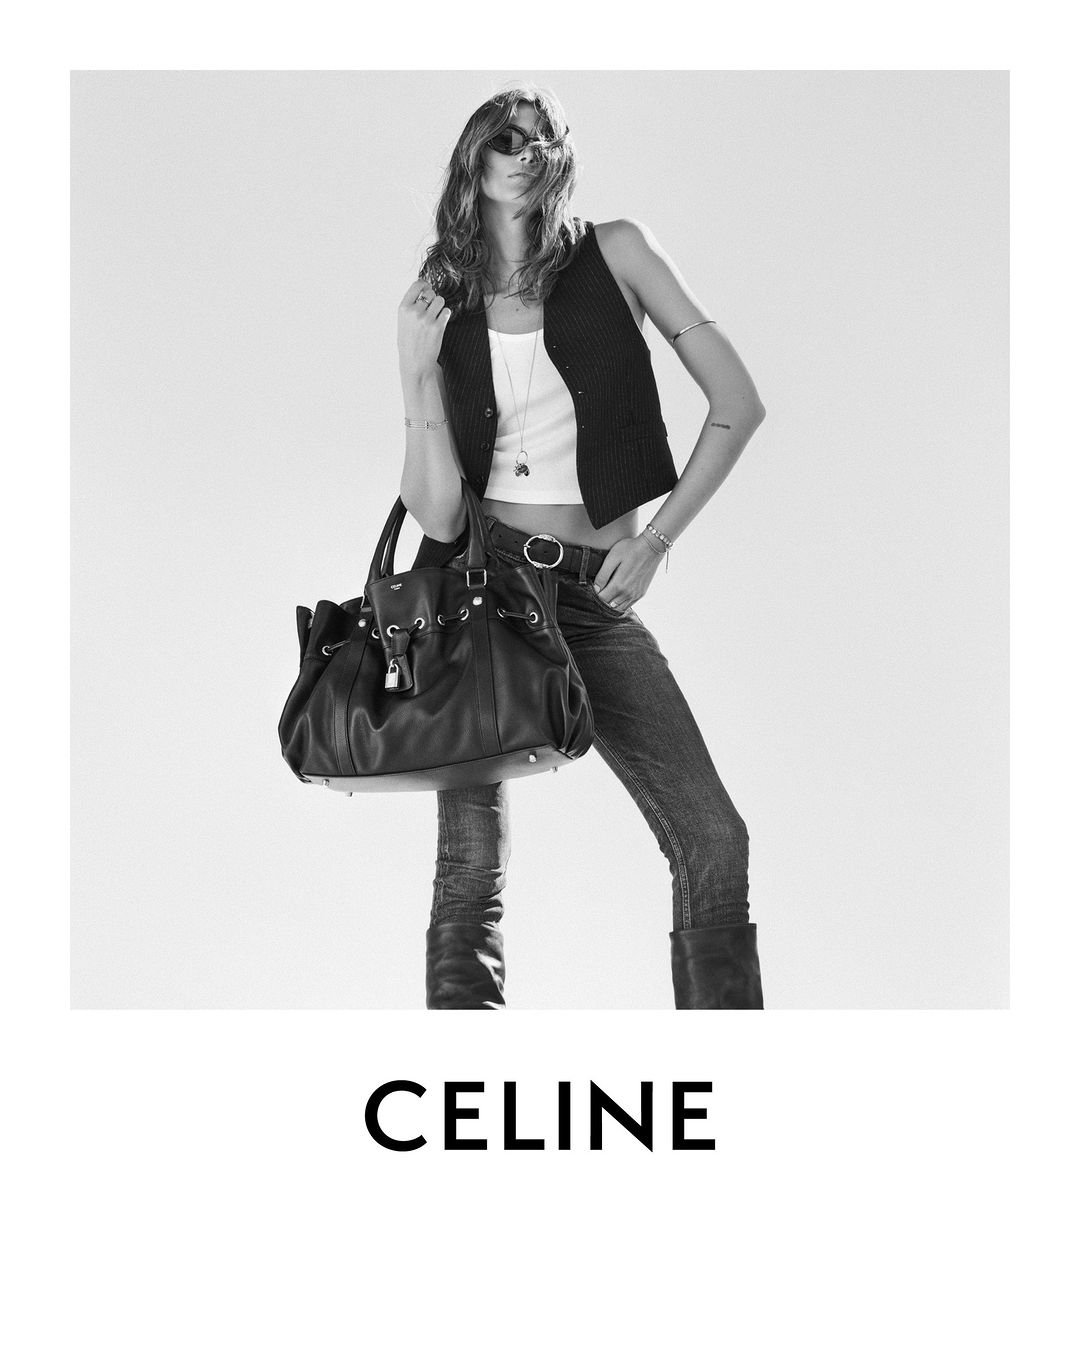 LVMH names Hedi Slimane as Creative Director of Celine brand